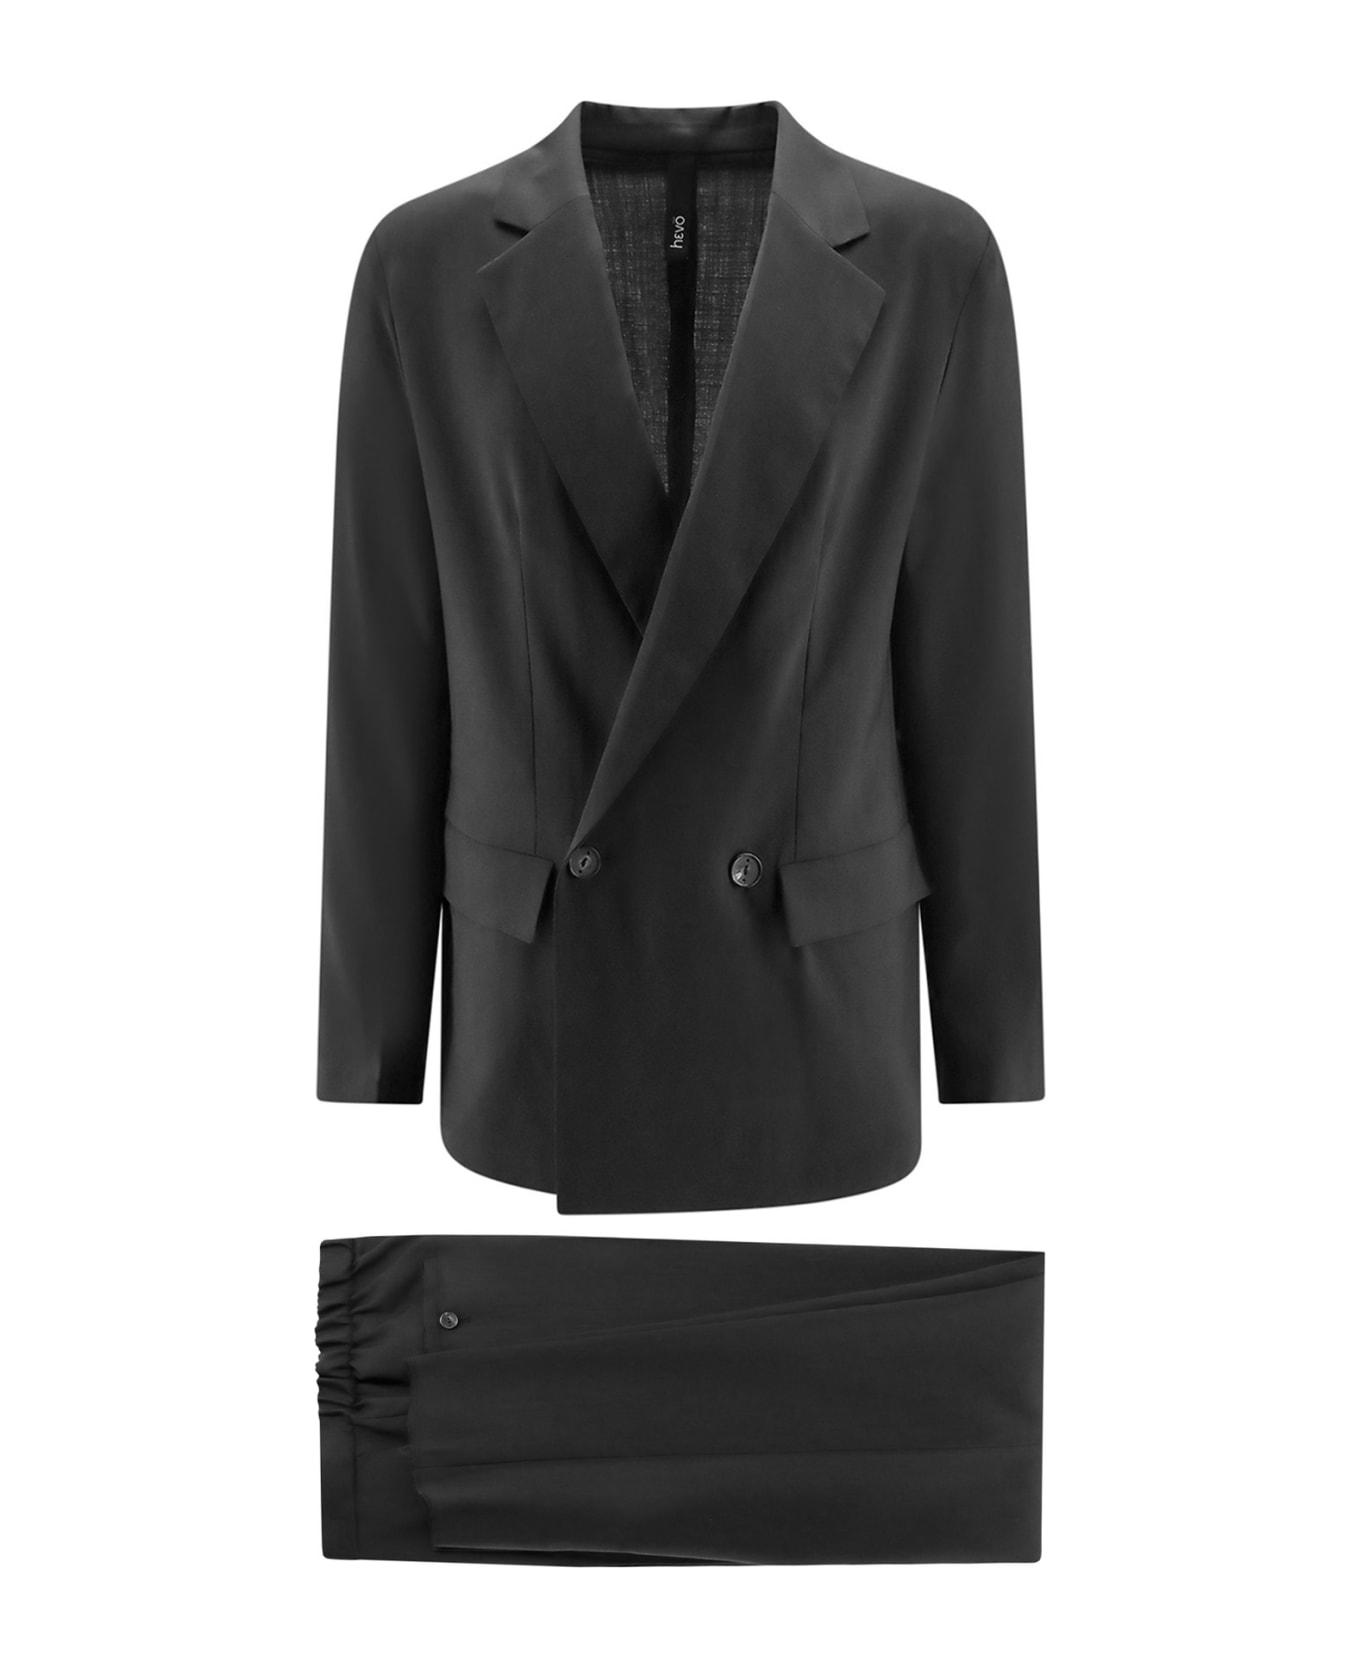 Hevò Suit - Black スーツ